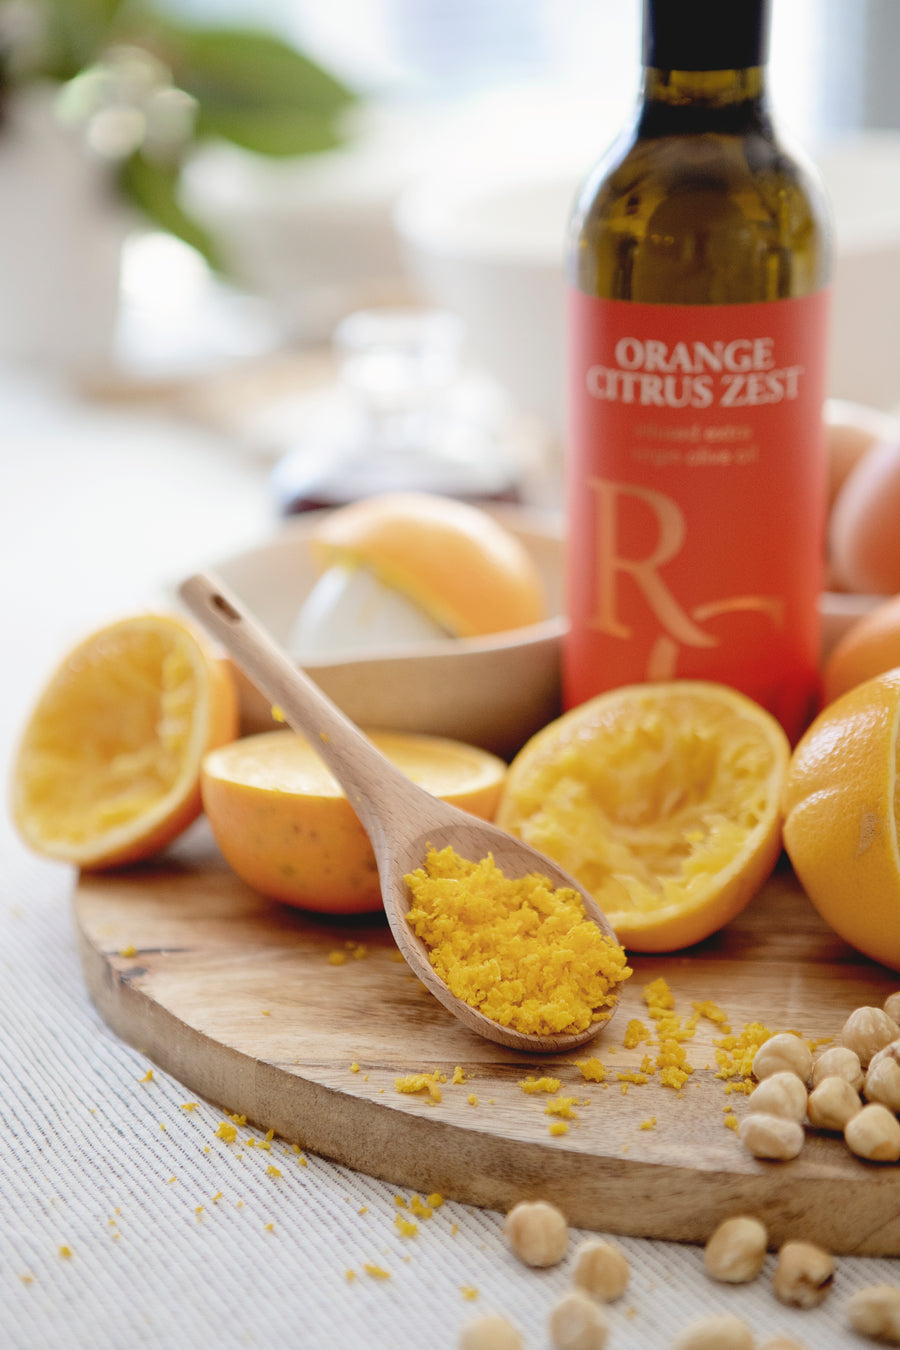 Orange Citrus Zest Olive Oil